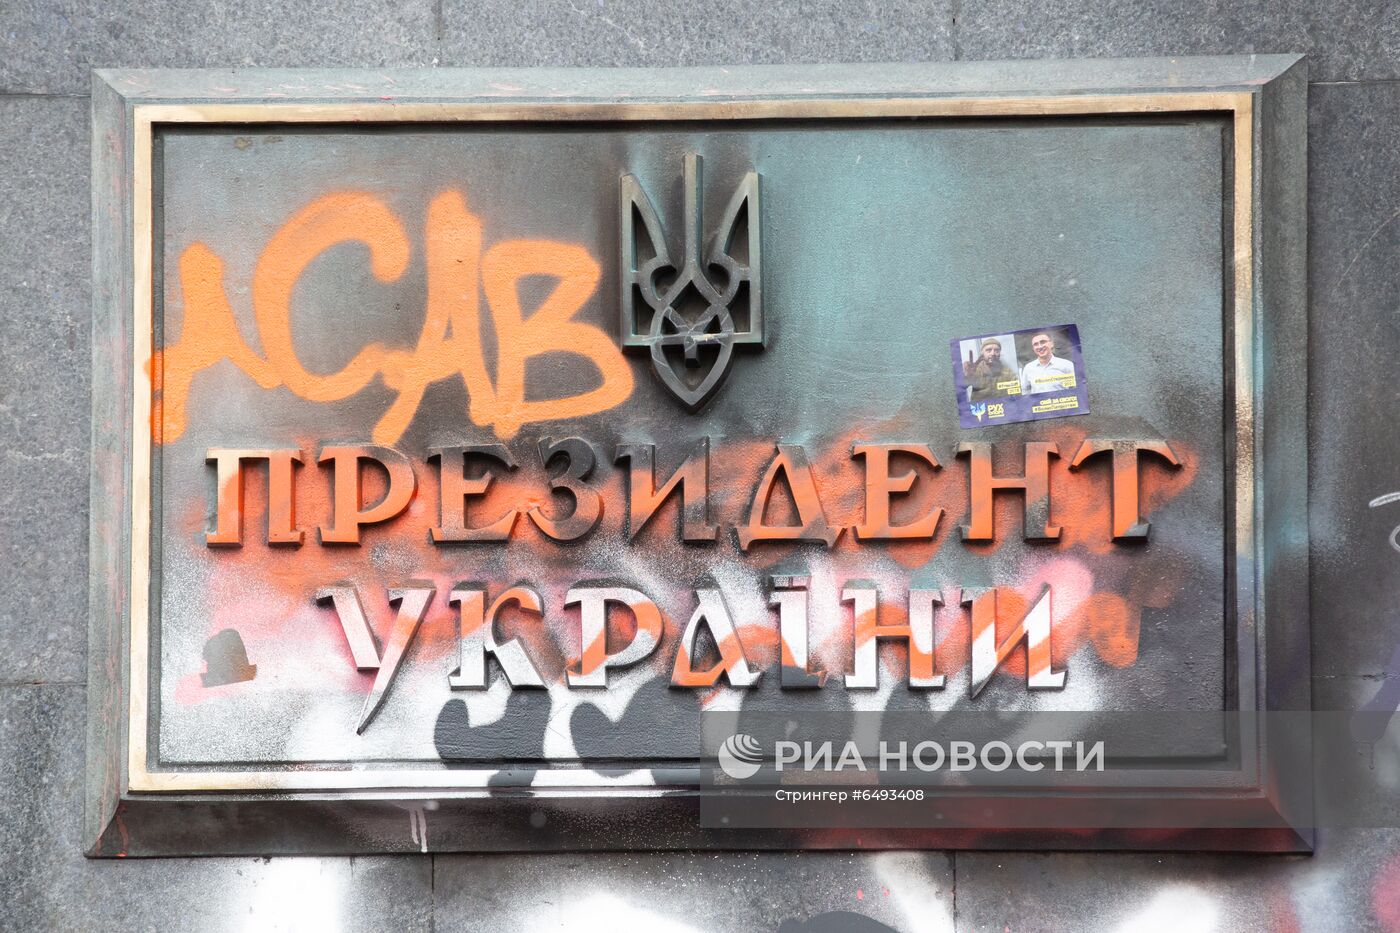 Акция националистов у офиса президента Украины